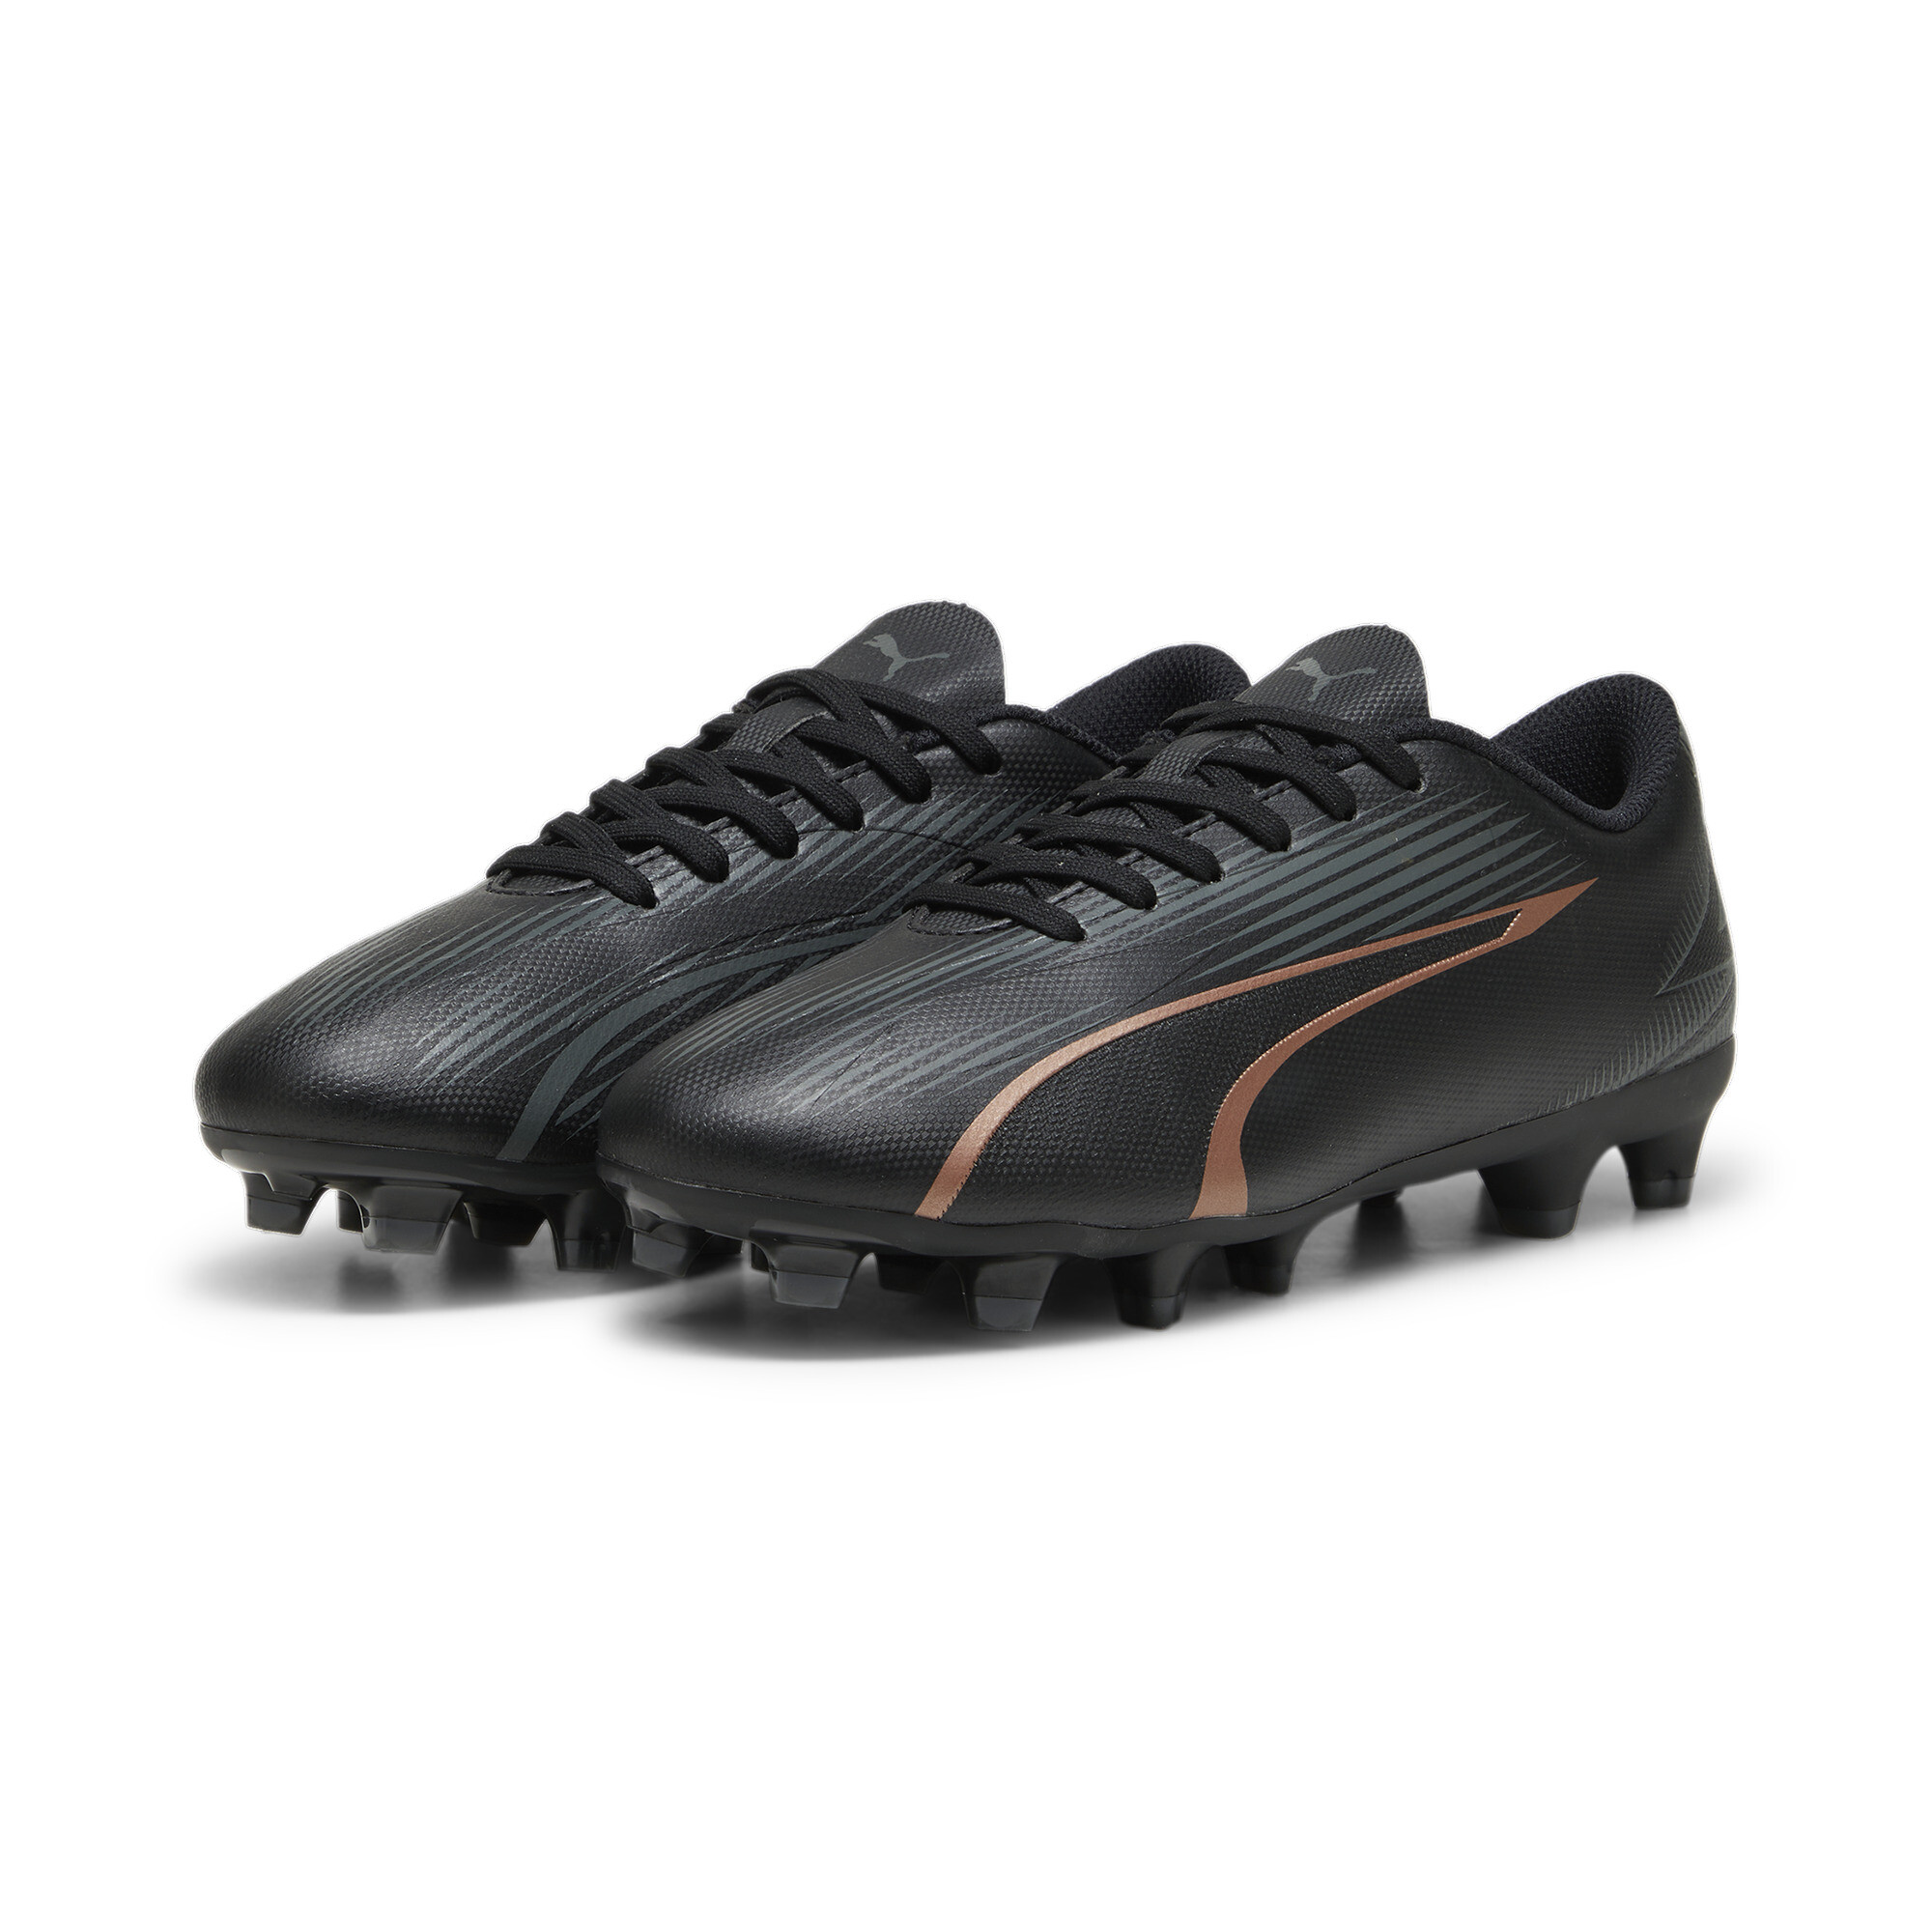 PUMA ULTRA PLAY FG/AG Youth Football Boots In Black, Size EU 35.5